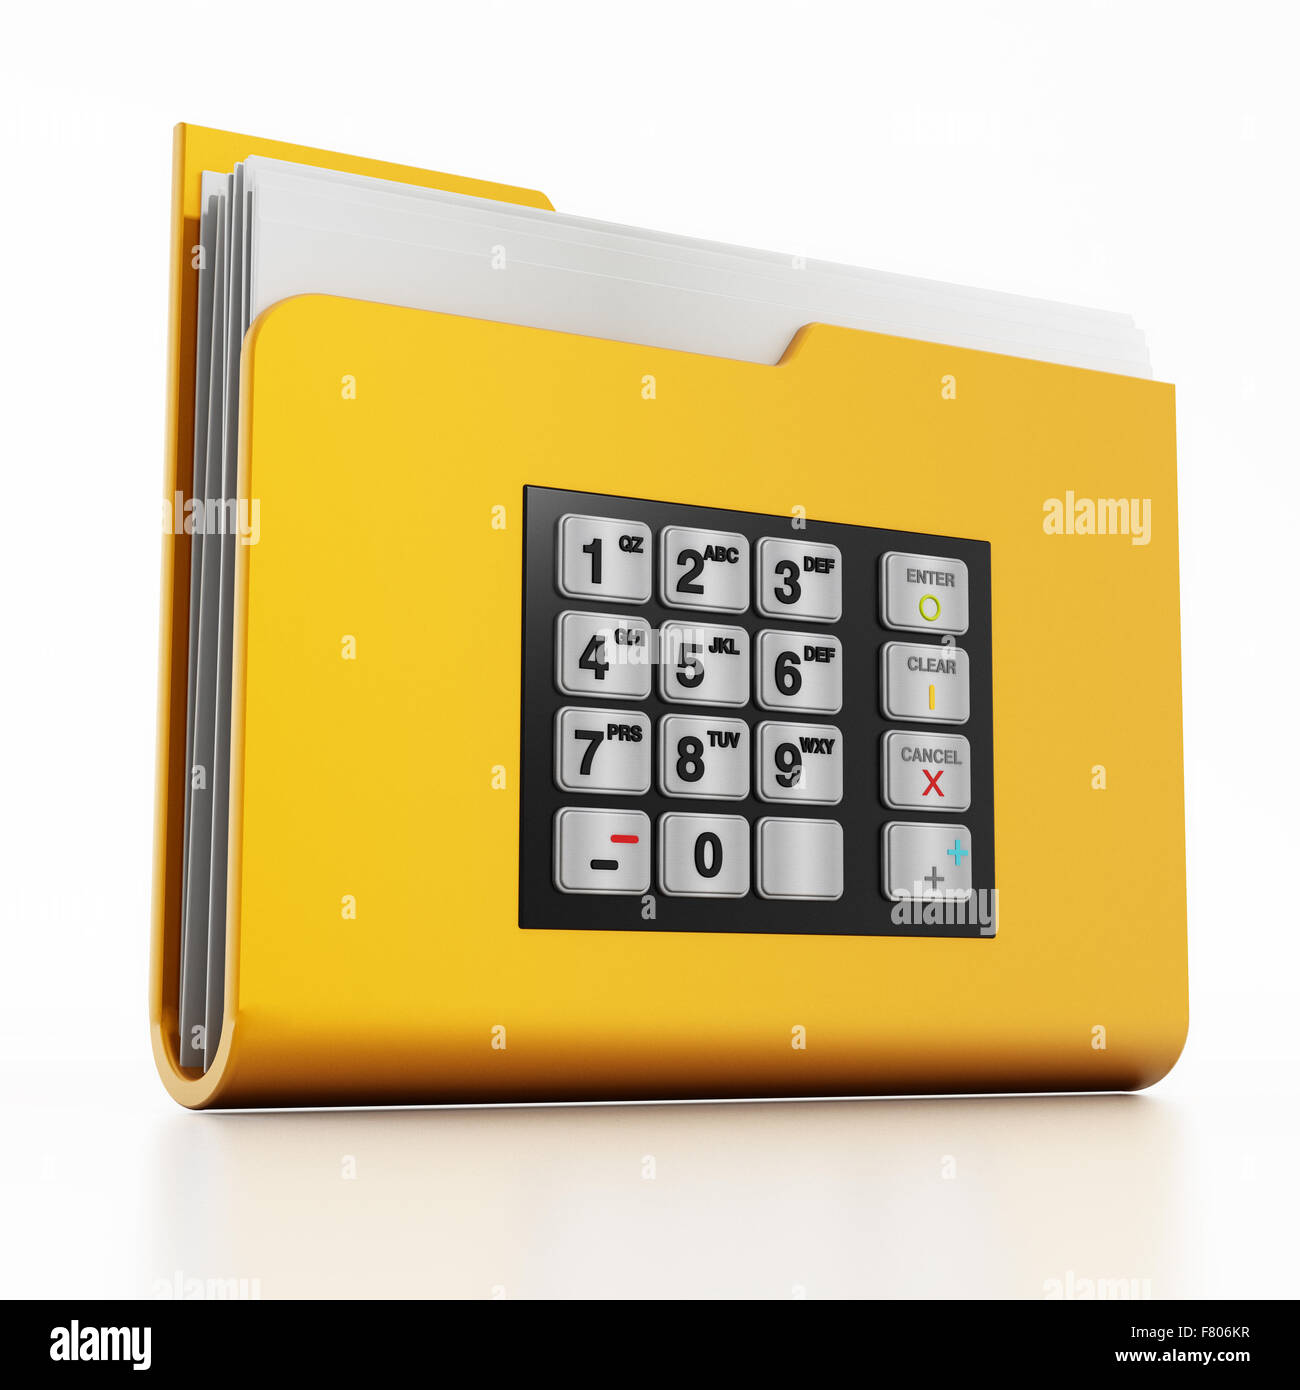 ATM keypad on folder icon with documents isolated on white background Stock Photo